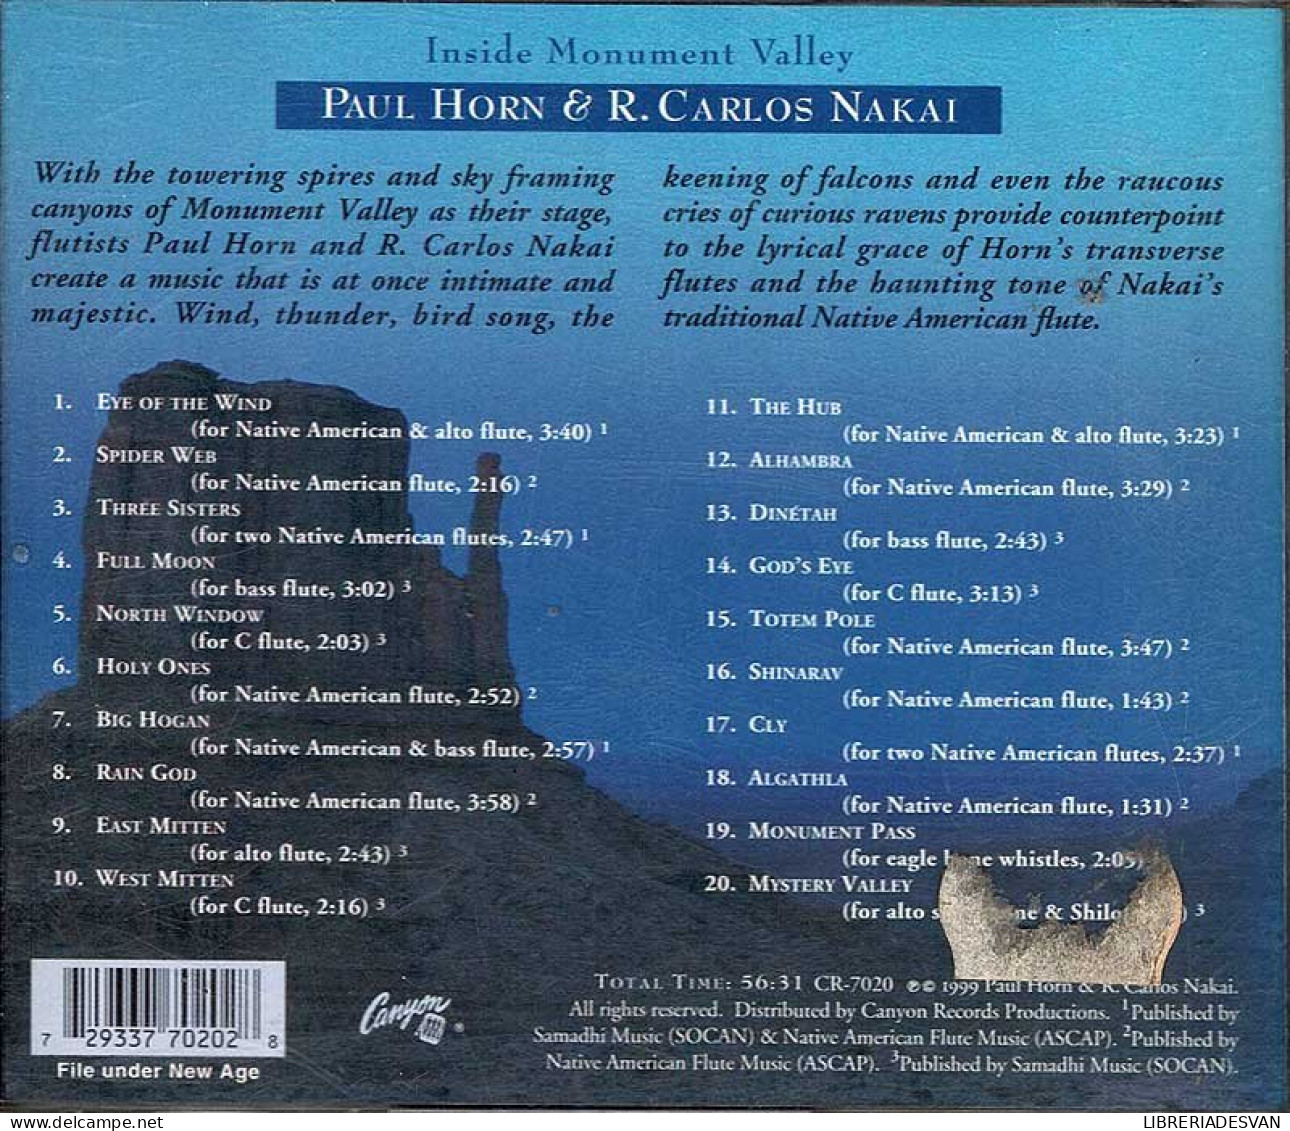 Paul Horn & R. Carlos Nakai - Inside Monument Valley. CD - New Age